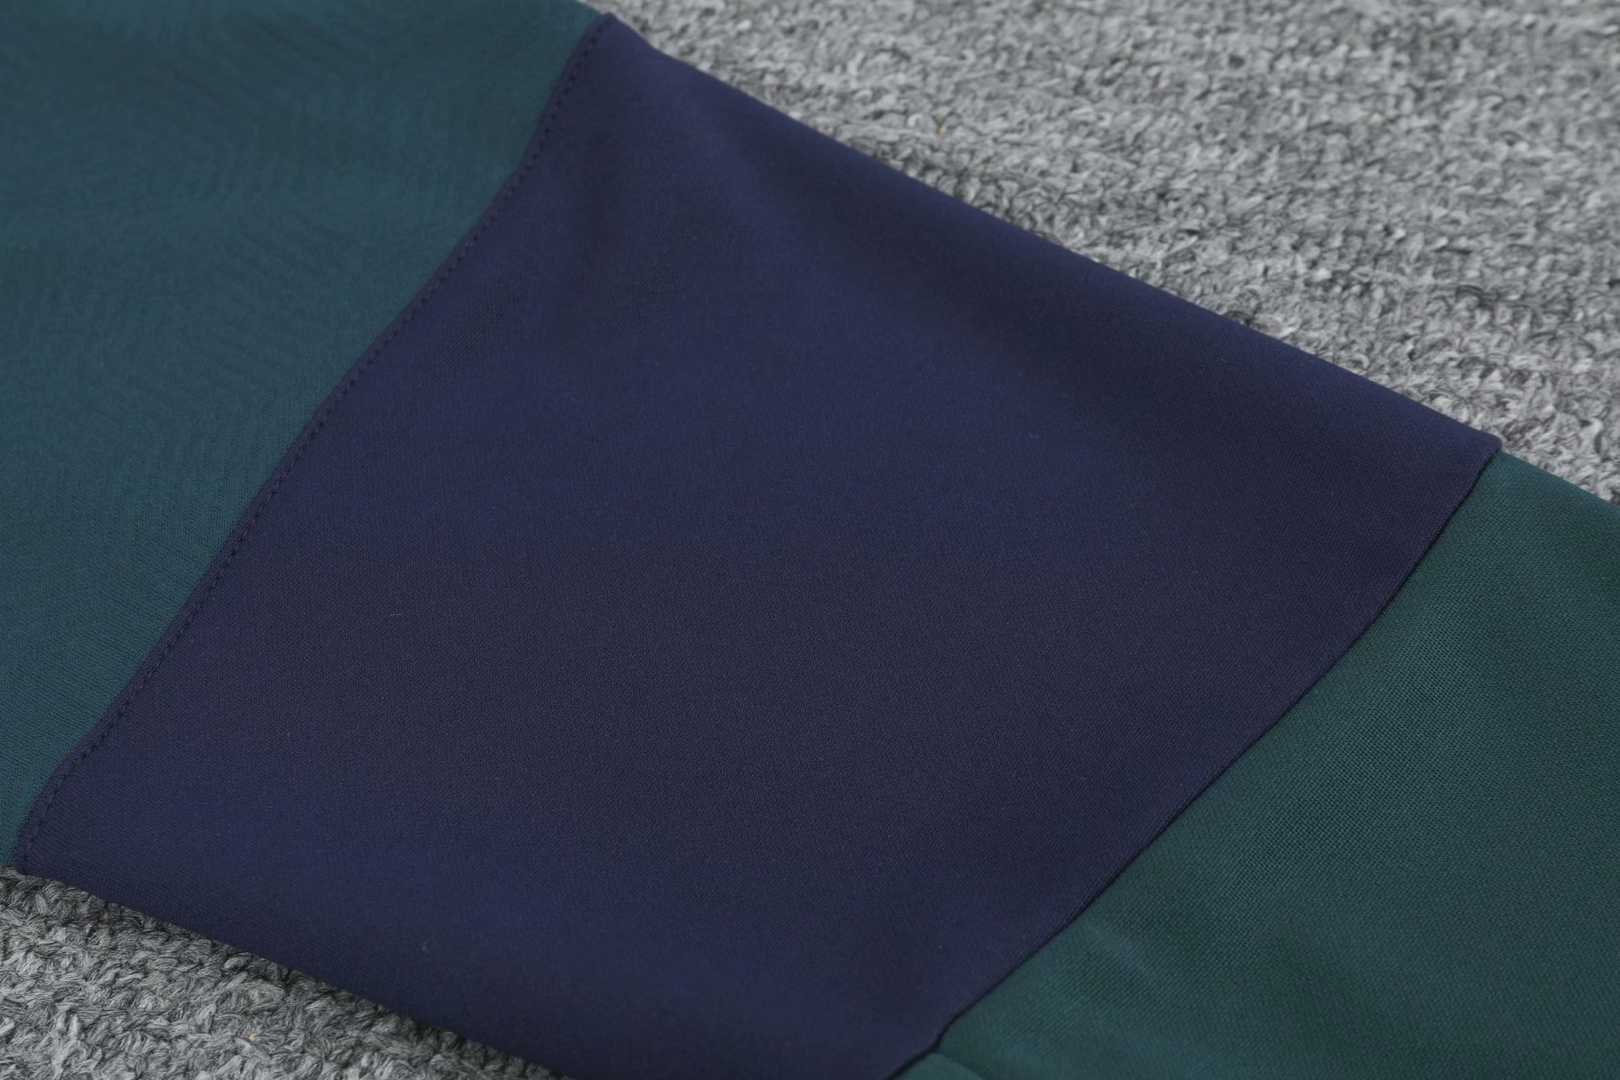 2019/20 Italy Half Zip Green Mens Soccer Training Suit(Jacket + Pants)